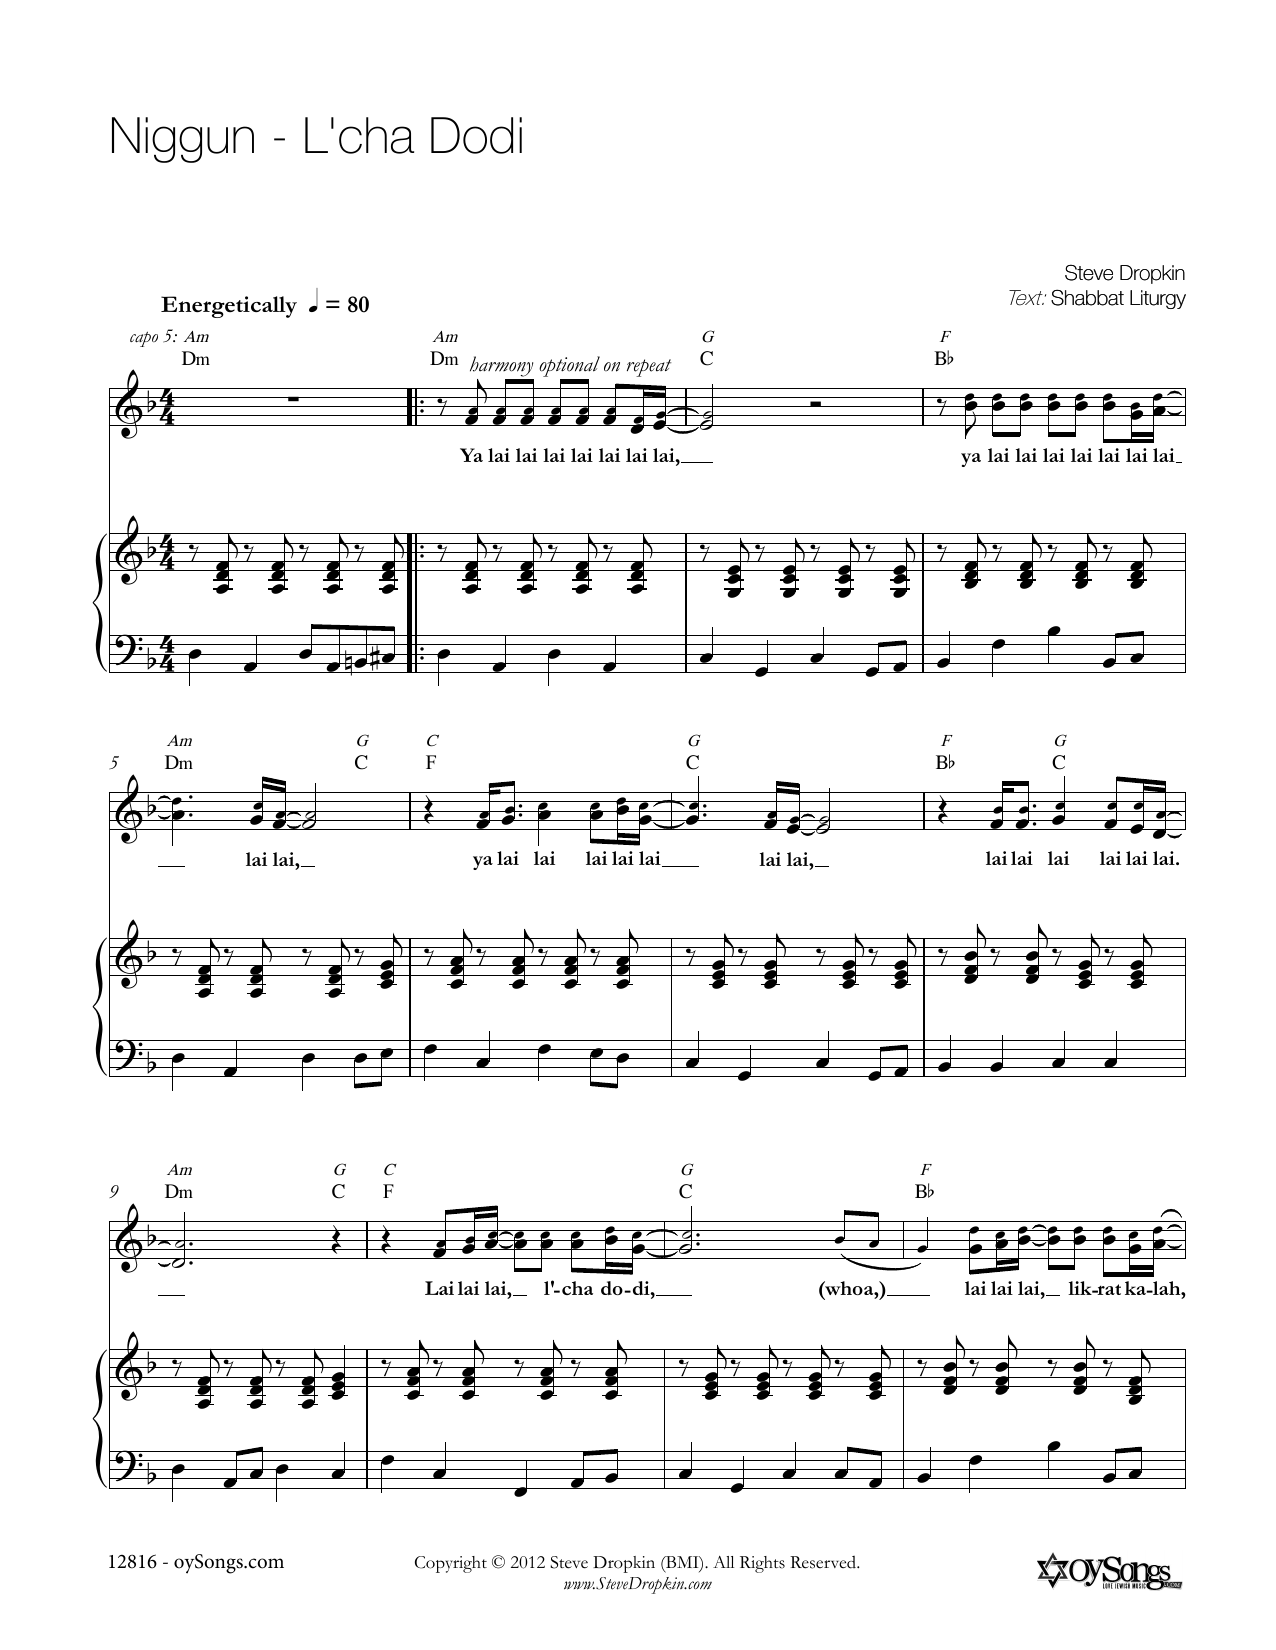 Steve Dropkin Niggun - L'chah Dodi sheet music notes and chords arranged for Piano, Vocal & Guitar Chords (Right-Hand Melody)